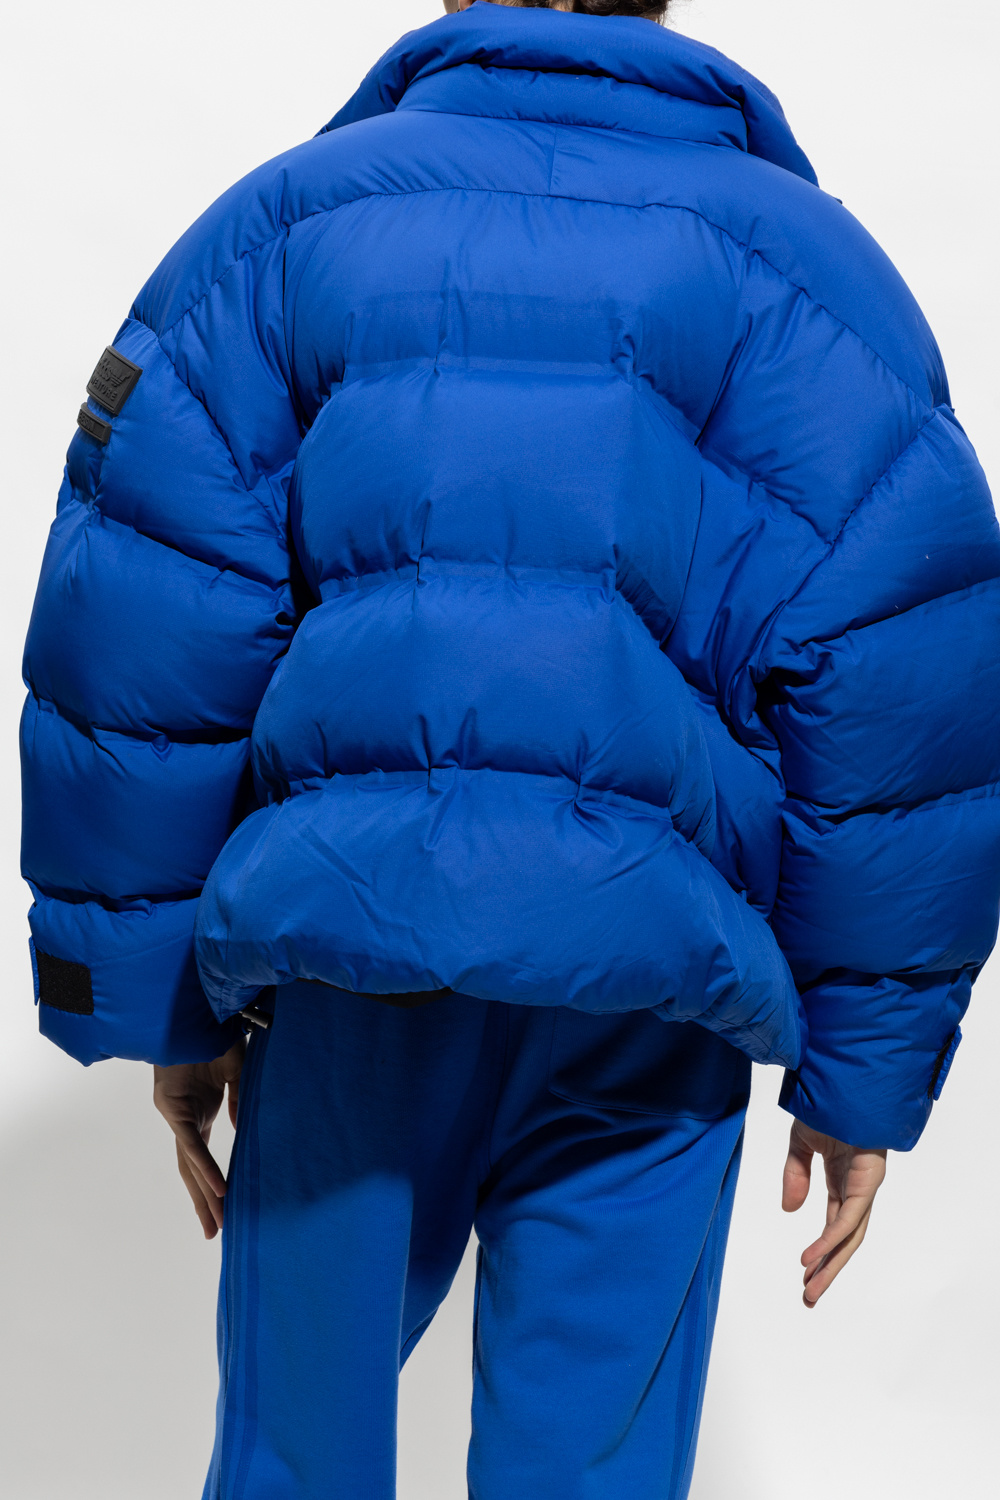 ADIDAS Originals The ‘Blue Version’ collection down jacket